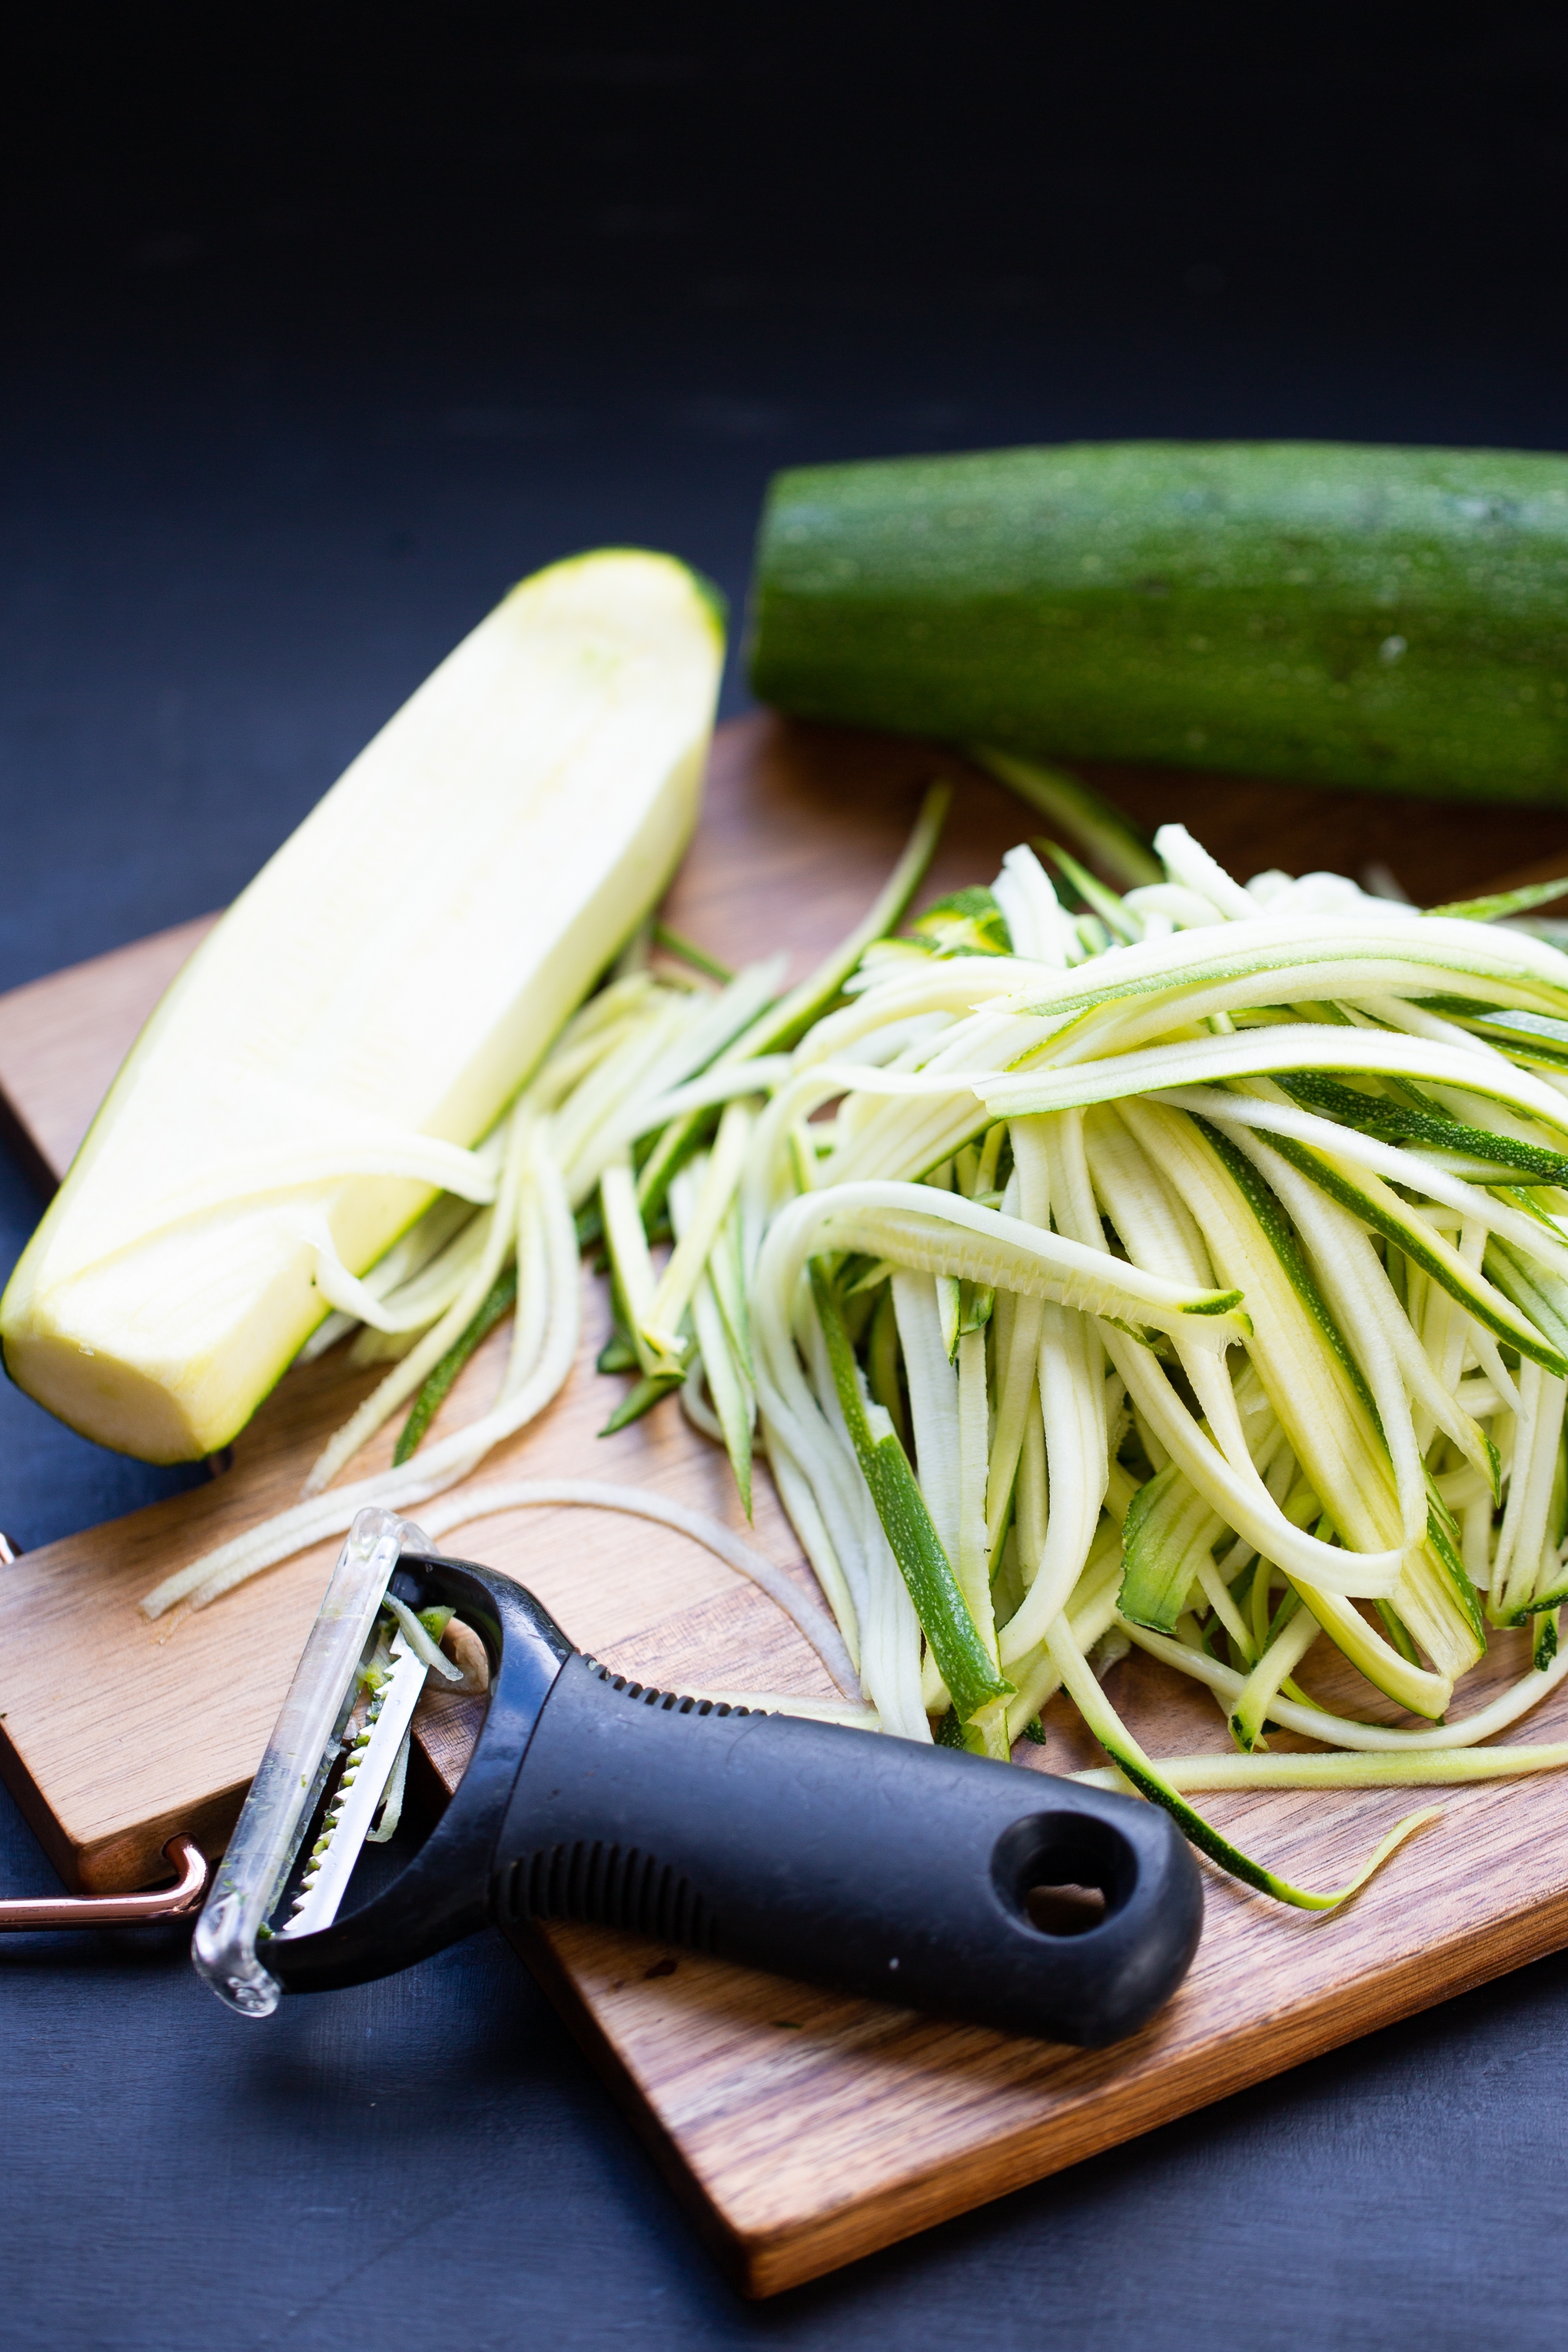 julienned zucchini on a cutting board